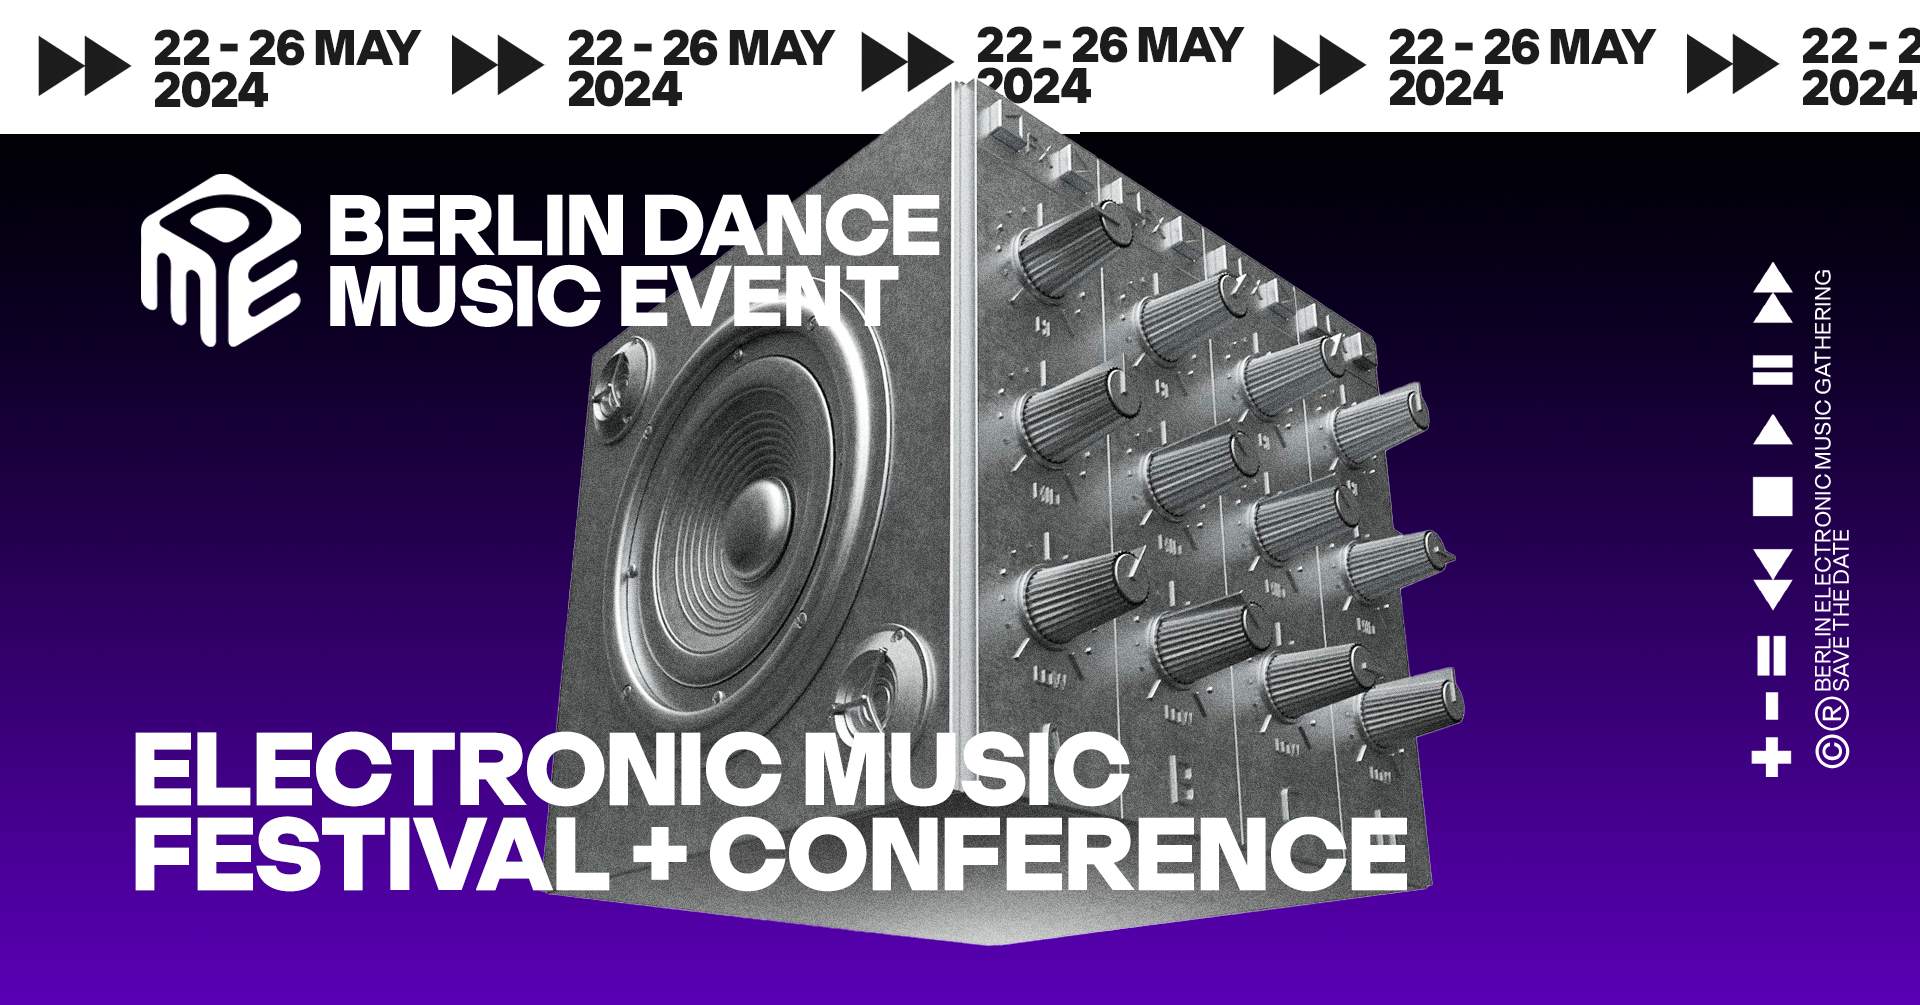 Berlin Dance Music Event 2024 - フライヤー表